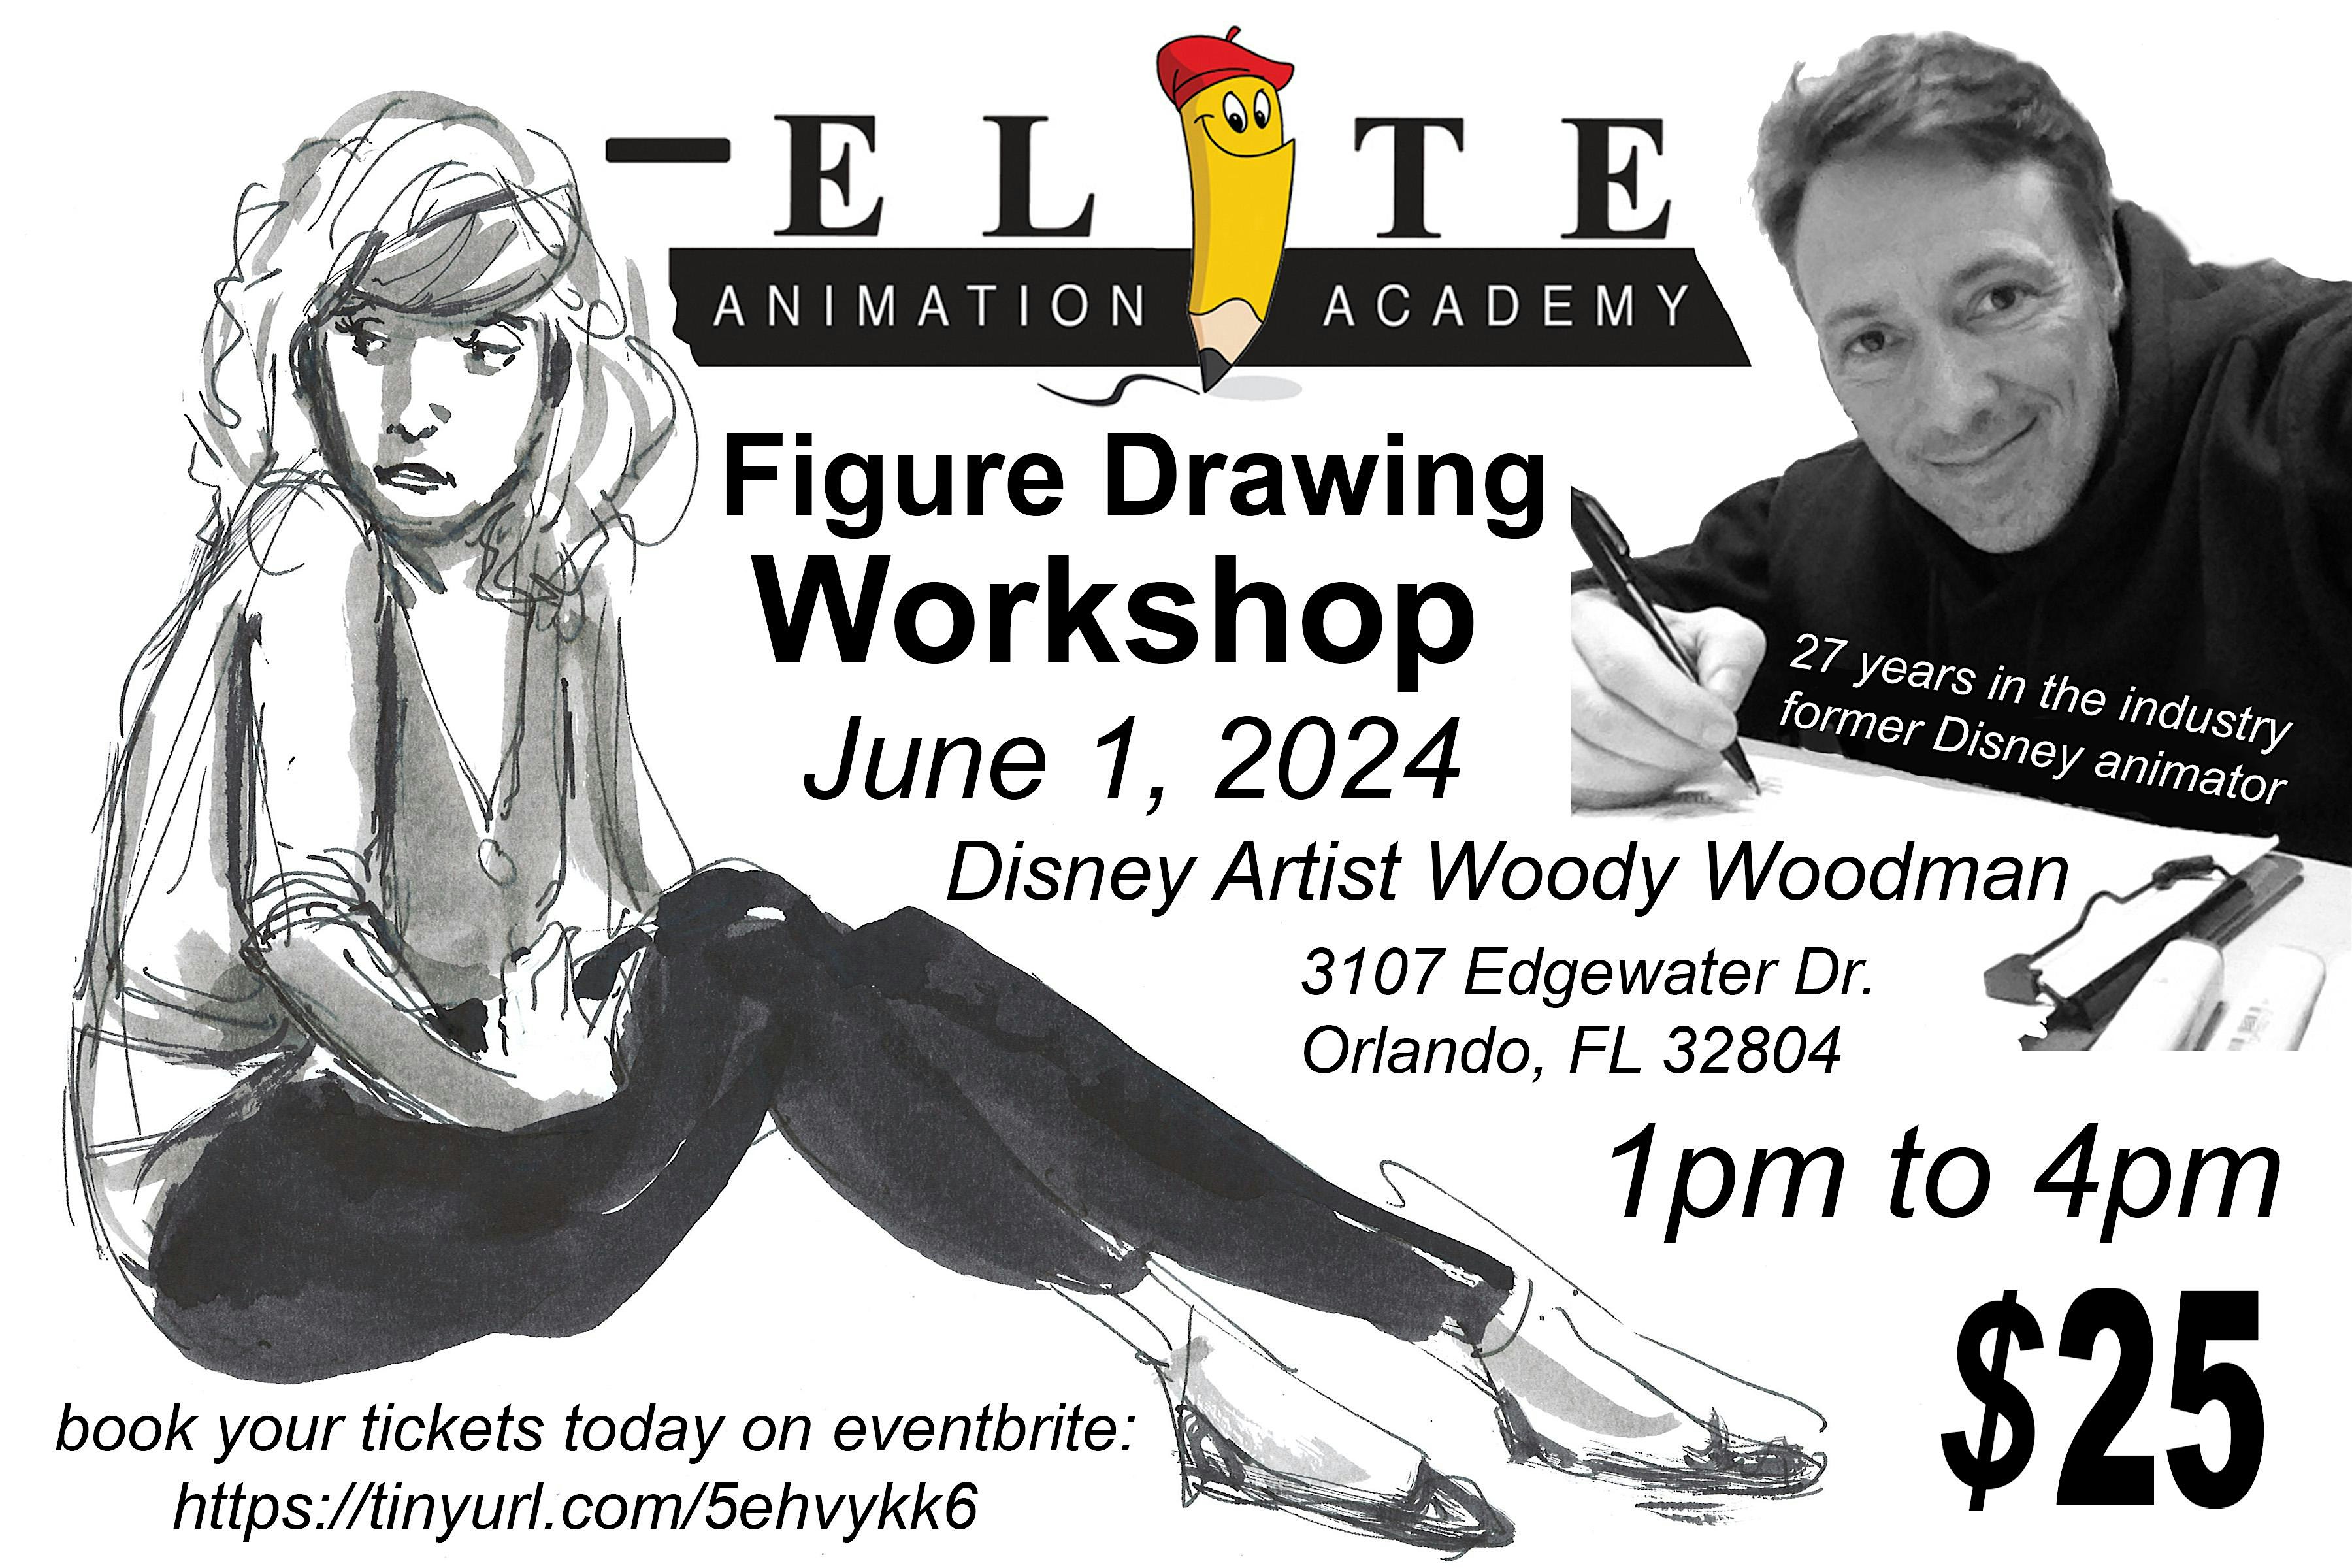 Figure Drawing Workshop with former Disney Animator Woody Woodman